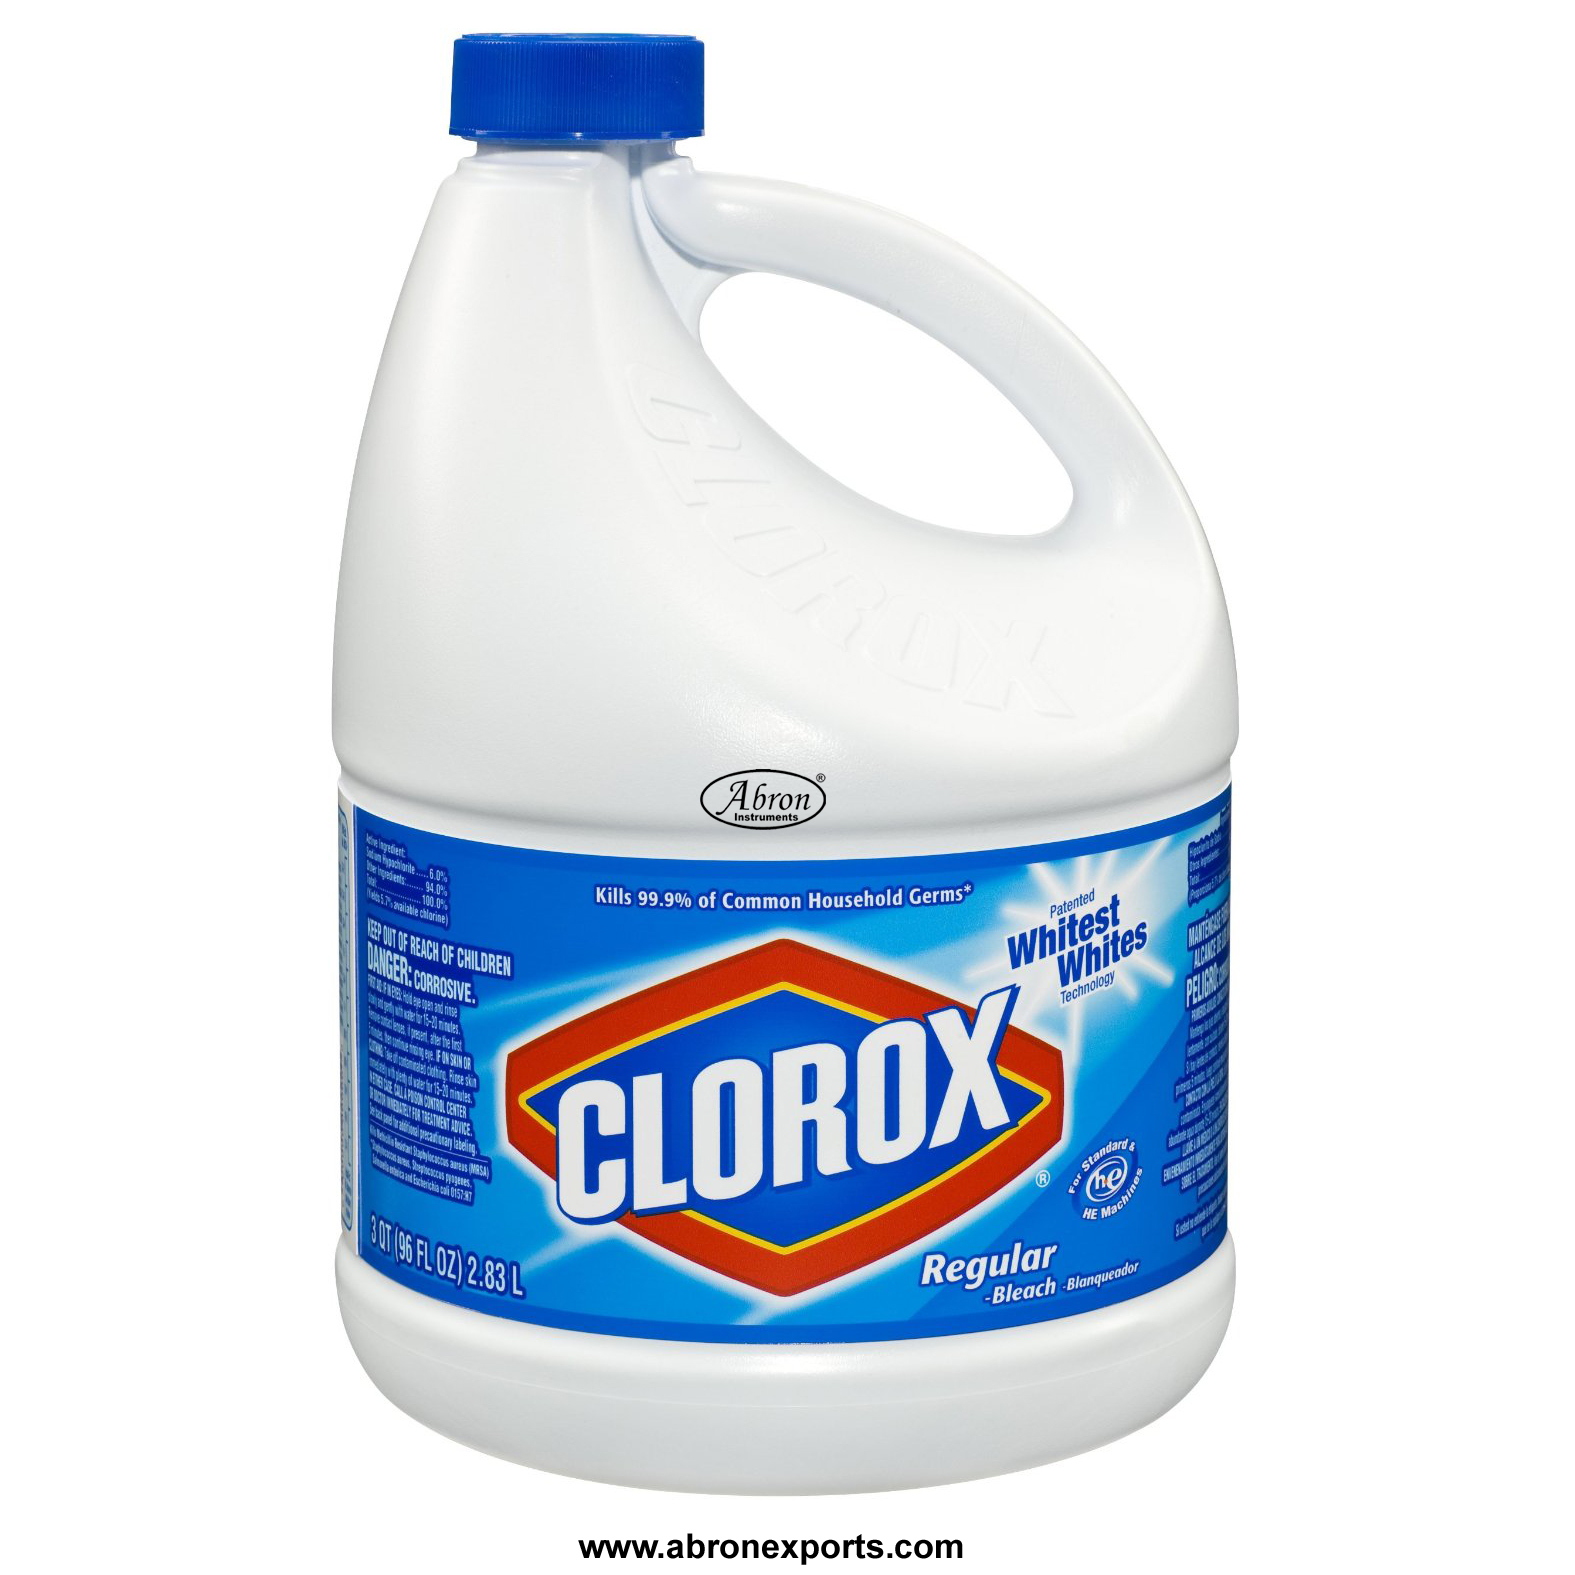 Disinfectant clorox abron ch-1051c5